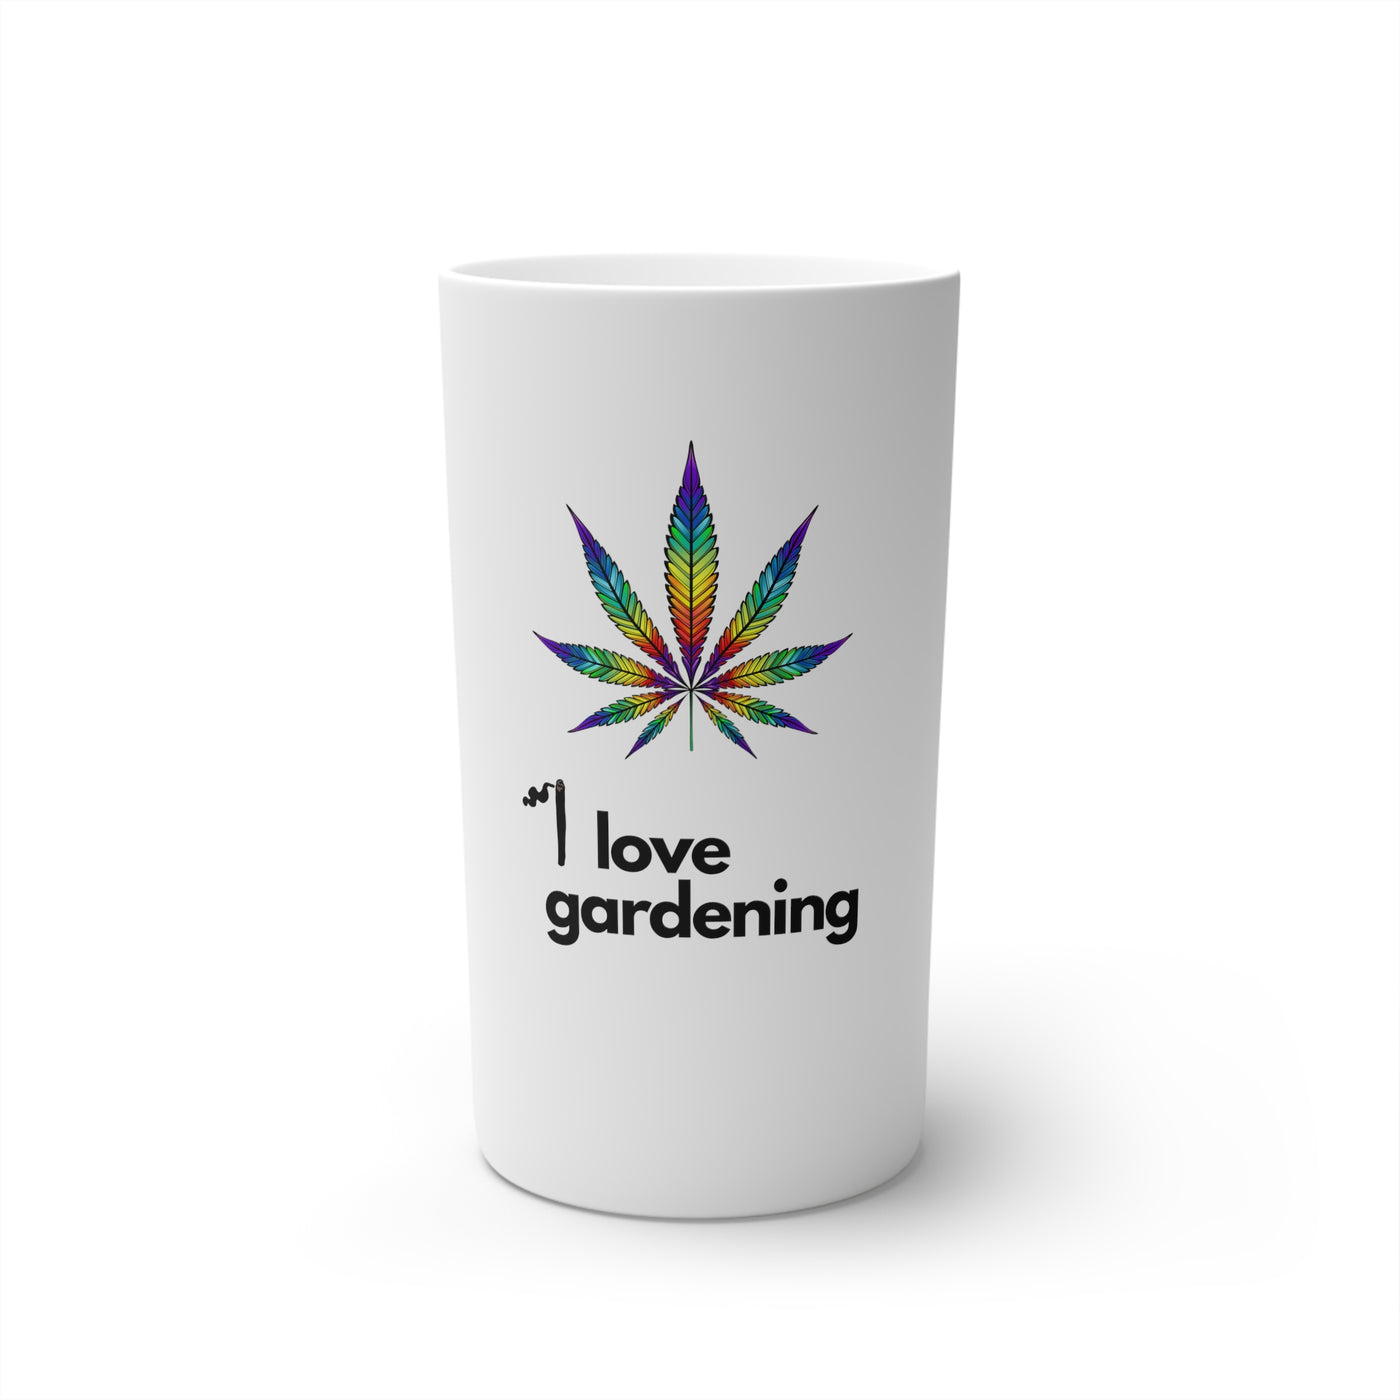 "I Love Gardening" White Conical Coffee Mugs (3oz, 8oz, 12oz)